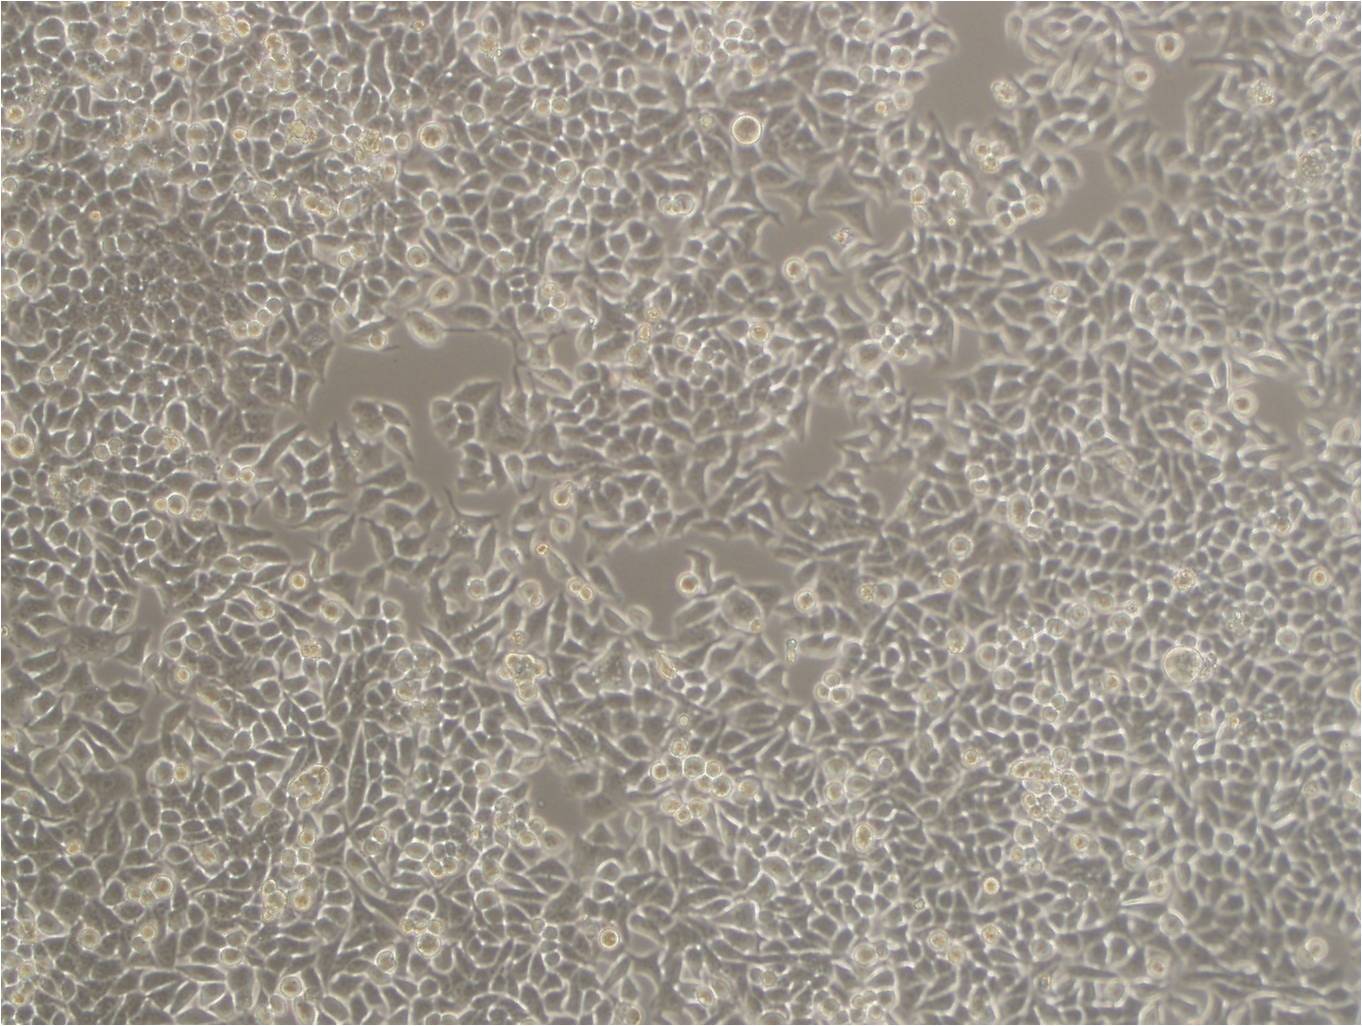 DLD-1细胞：人结直肠腺癌上皮细胞系